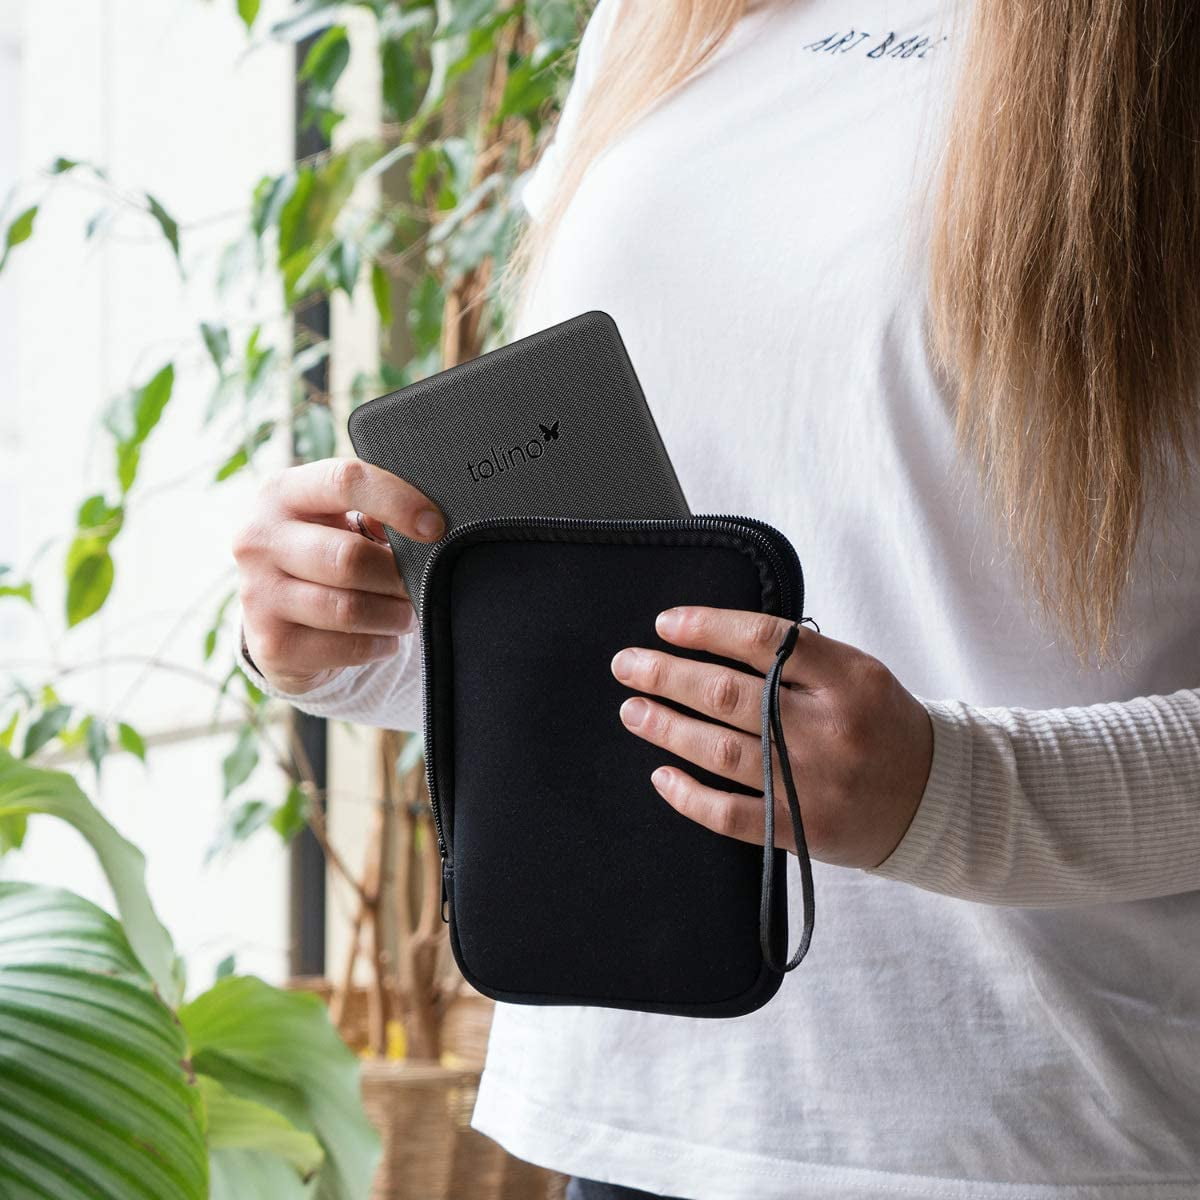 kwmobile Neoprene e-Reader Pouch Size eReader Universal eBook Sleeve Case with Zipper Wrist Strap White/Black